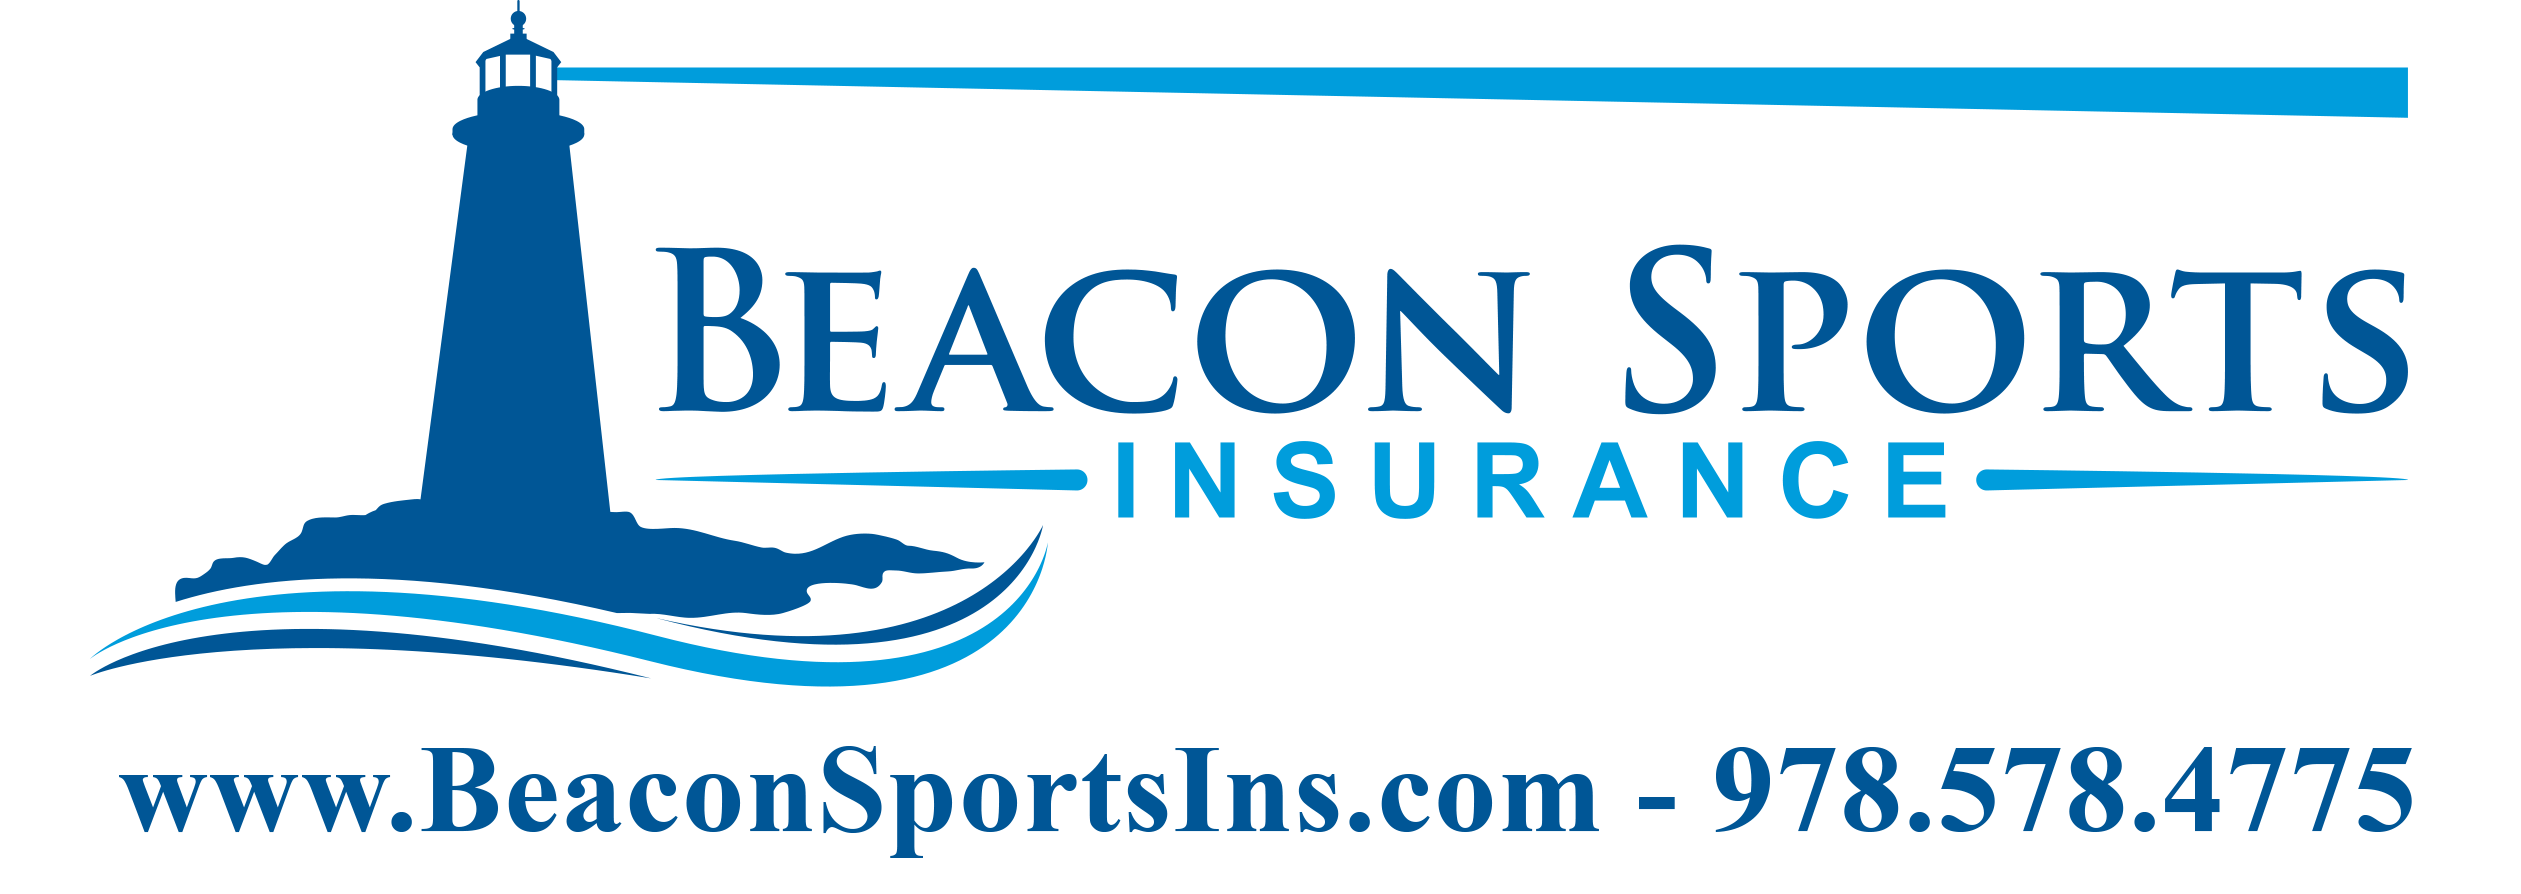 Beacon-Sports-Banner